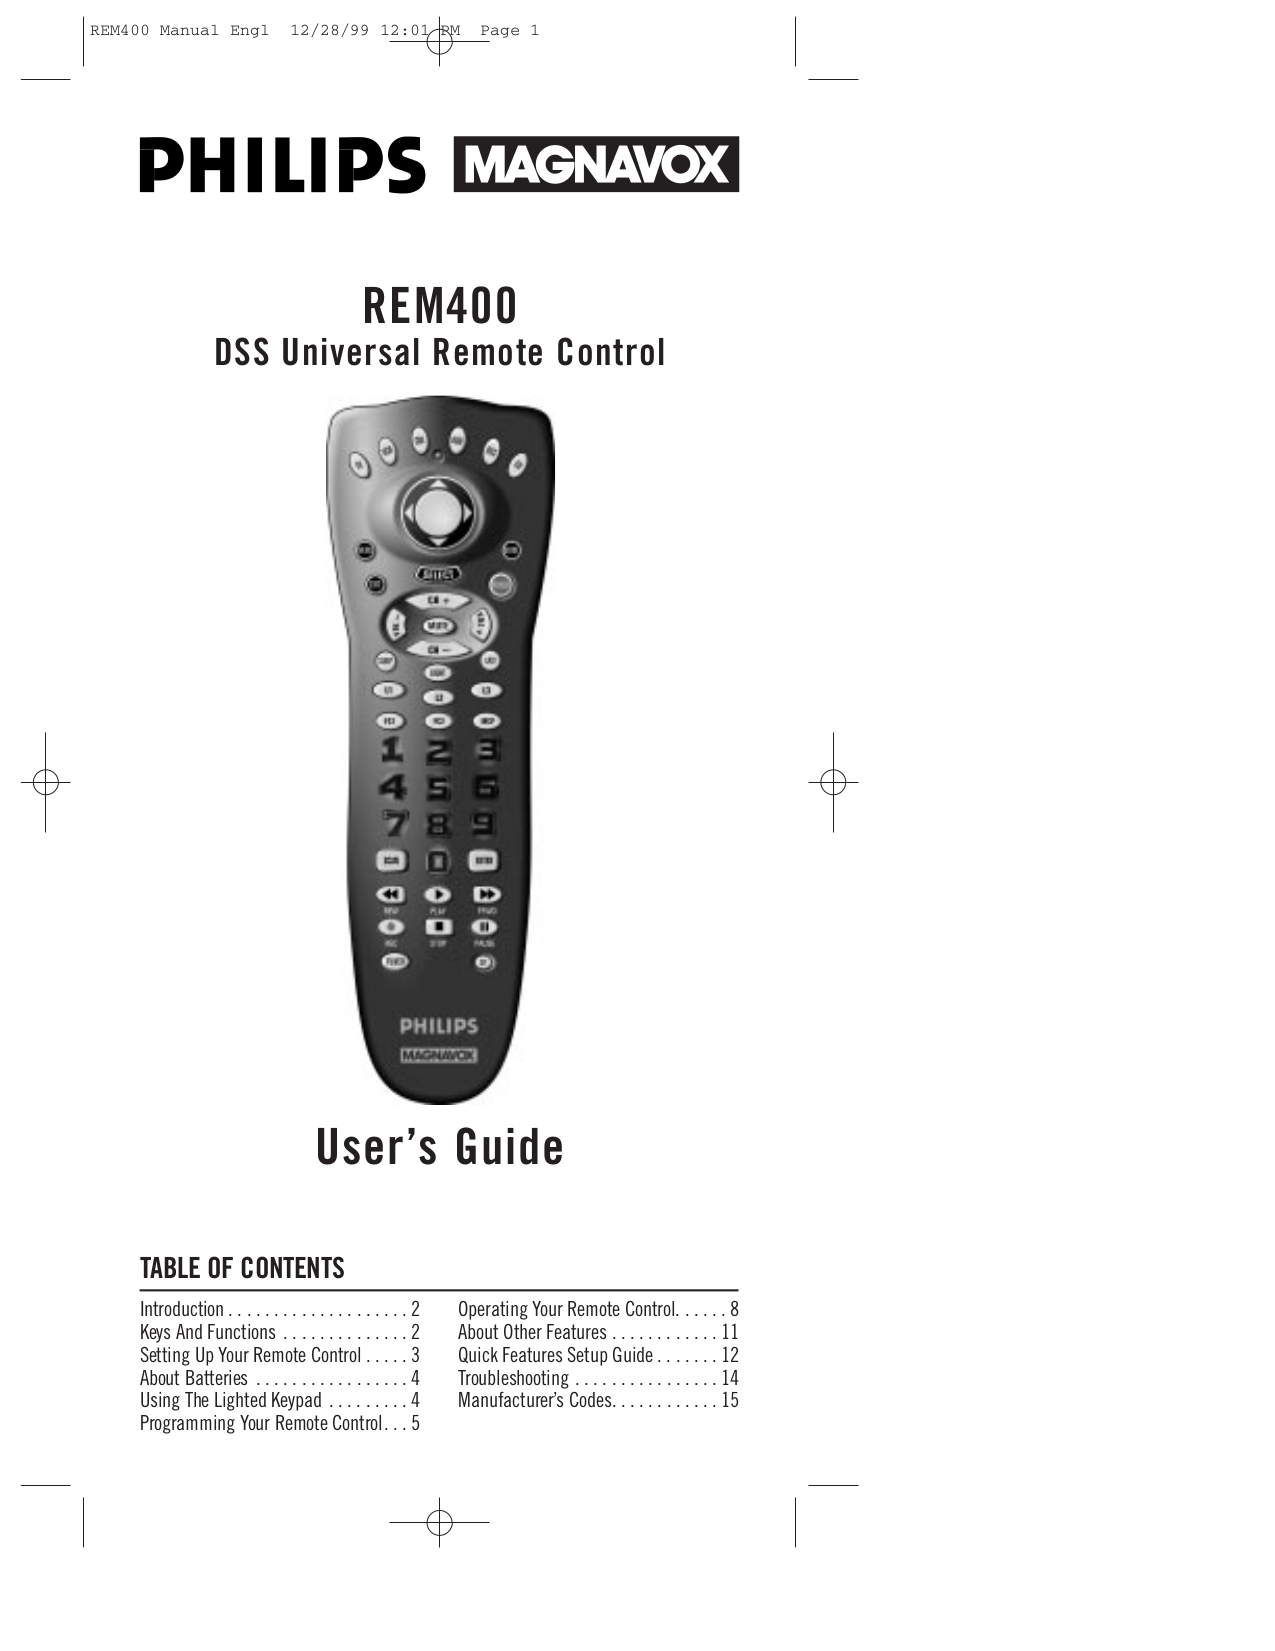 Download free pdf for RCA RCU510 Remote Control manual